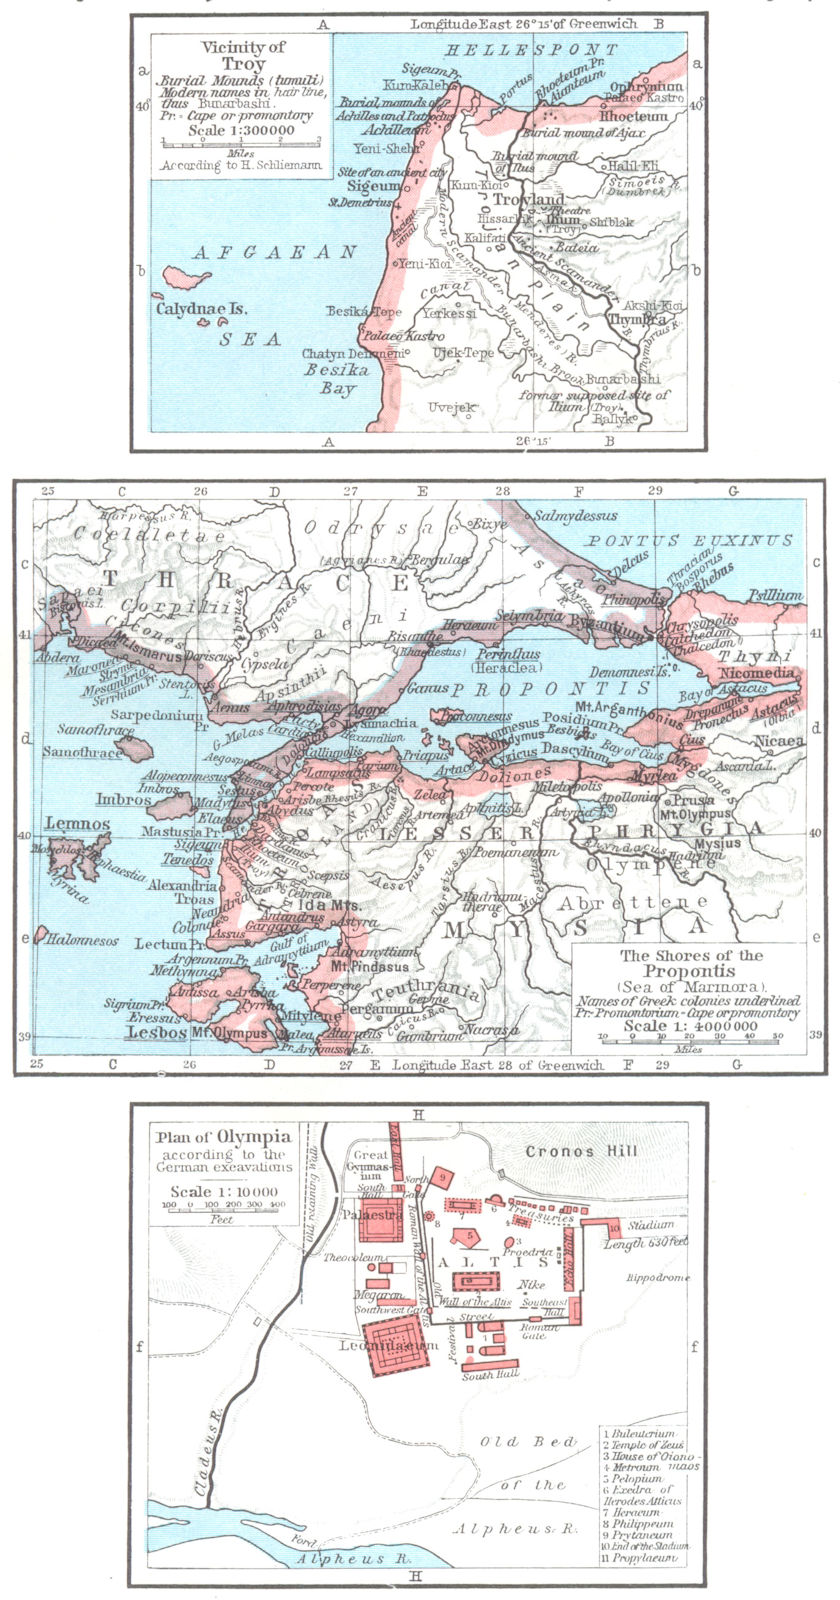 TURKEY. Troy; Propontis(Sea of Marmara); Olympia German excavations 1956 map